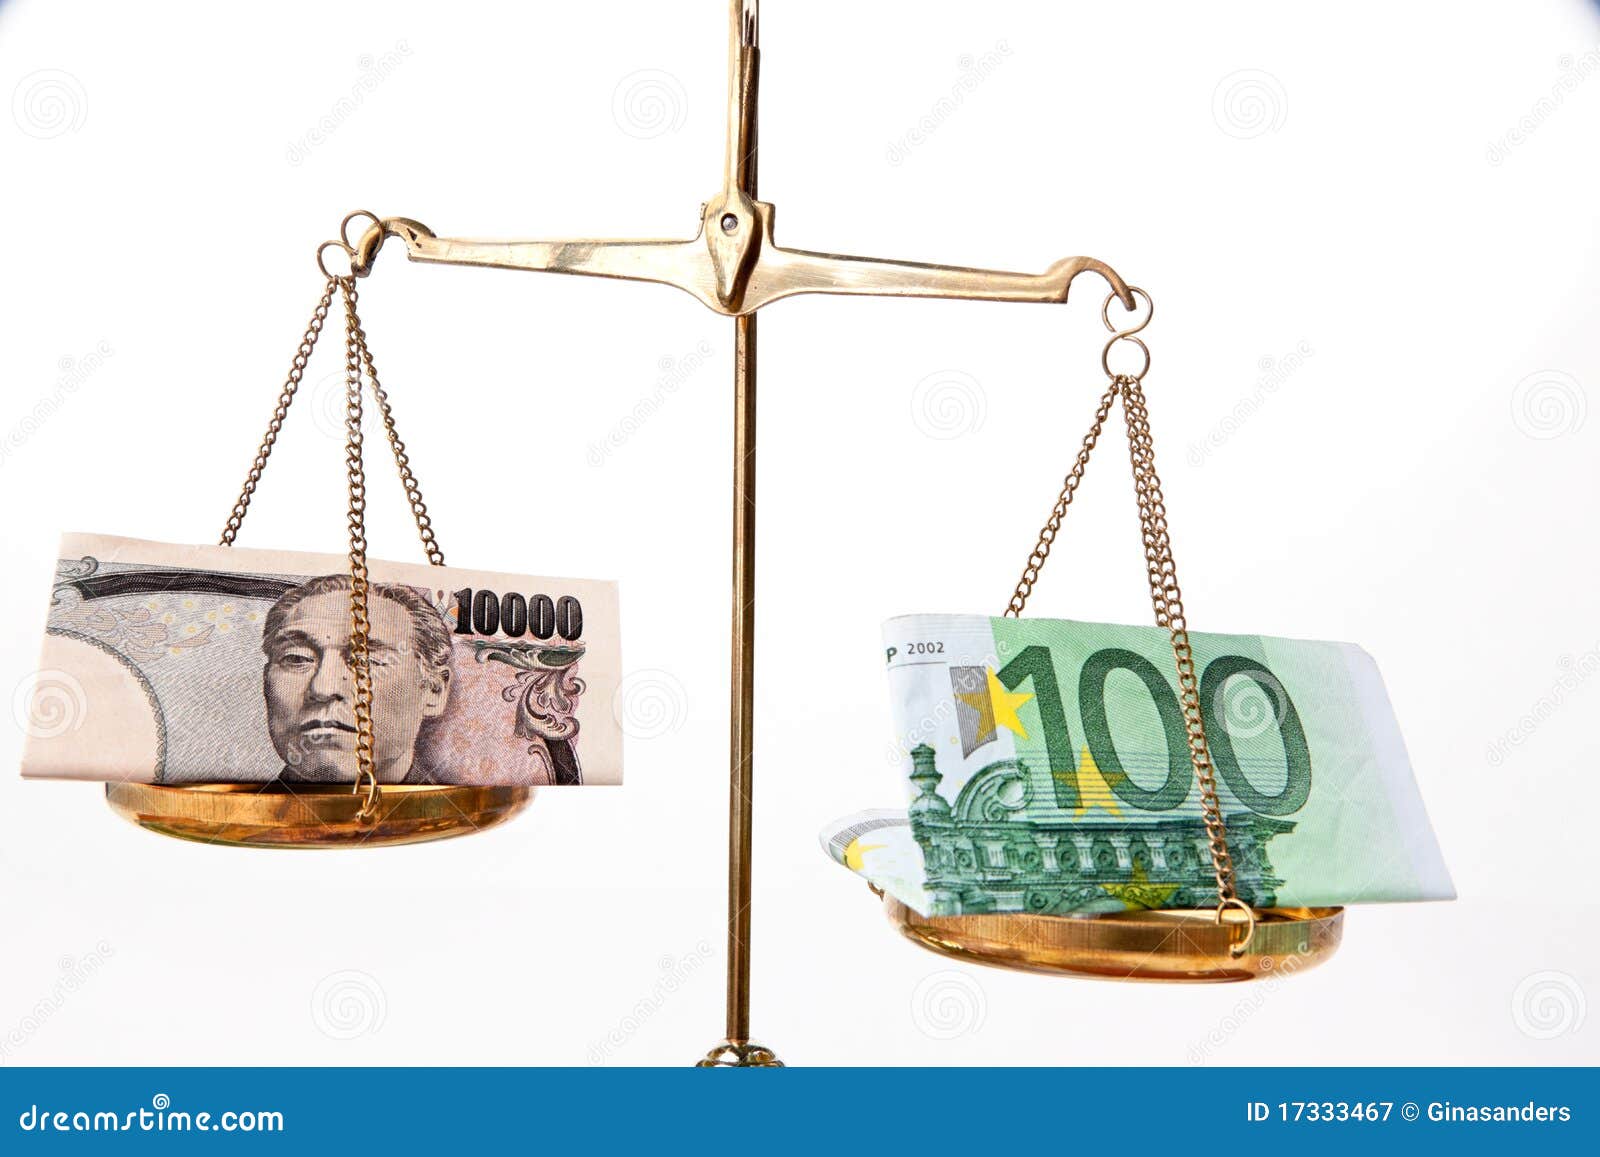 yen and euro money